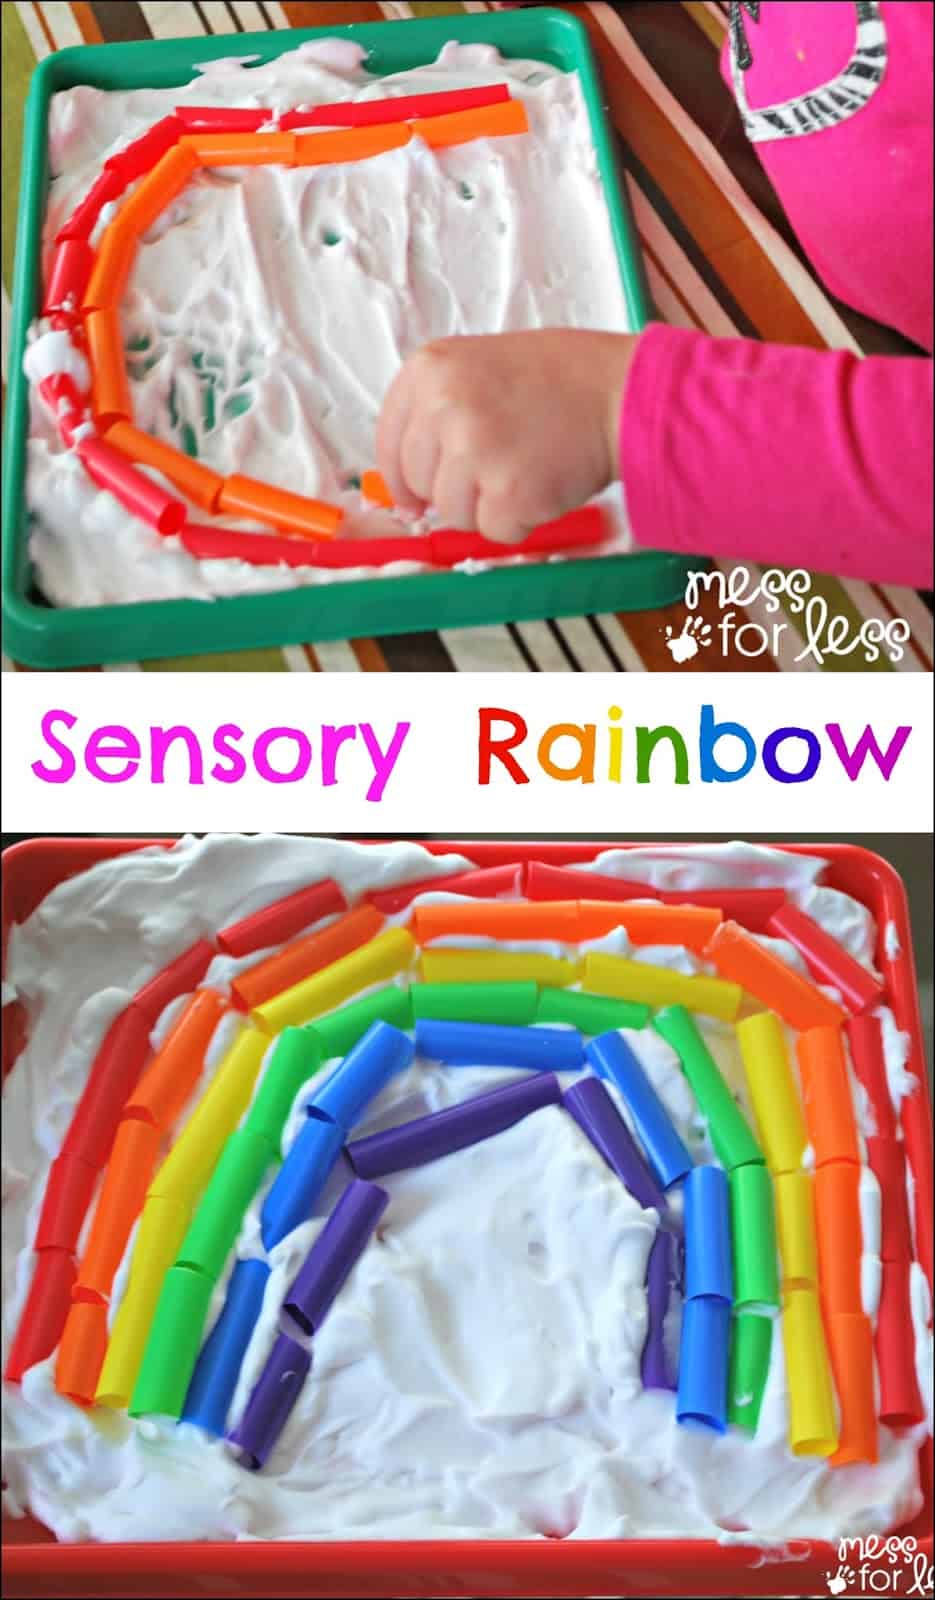 Making a Sensory Rainbow with Straws - Use straws and shaving cream for this fun sensory activity.